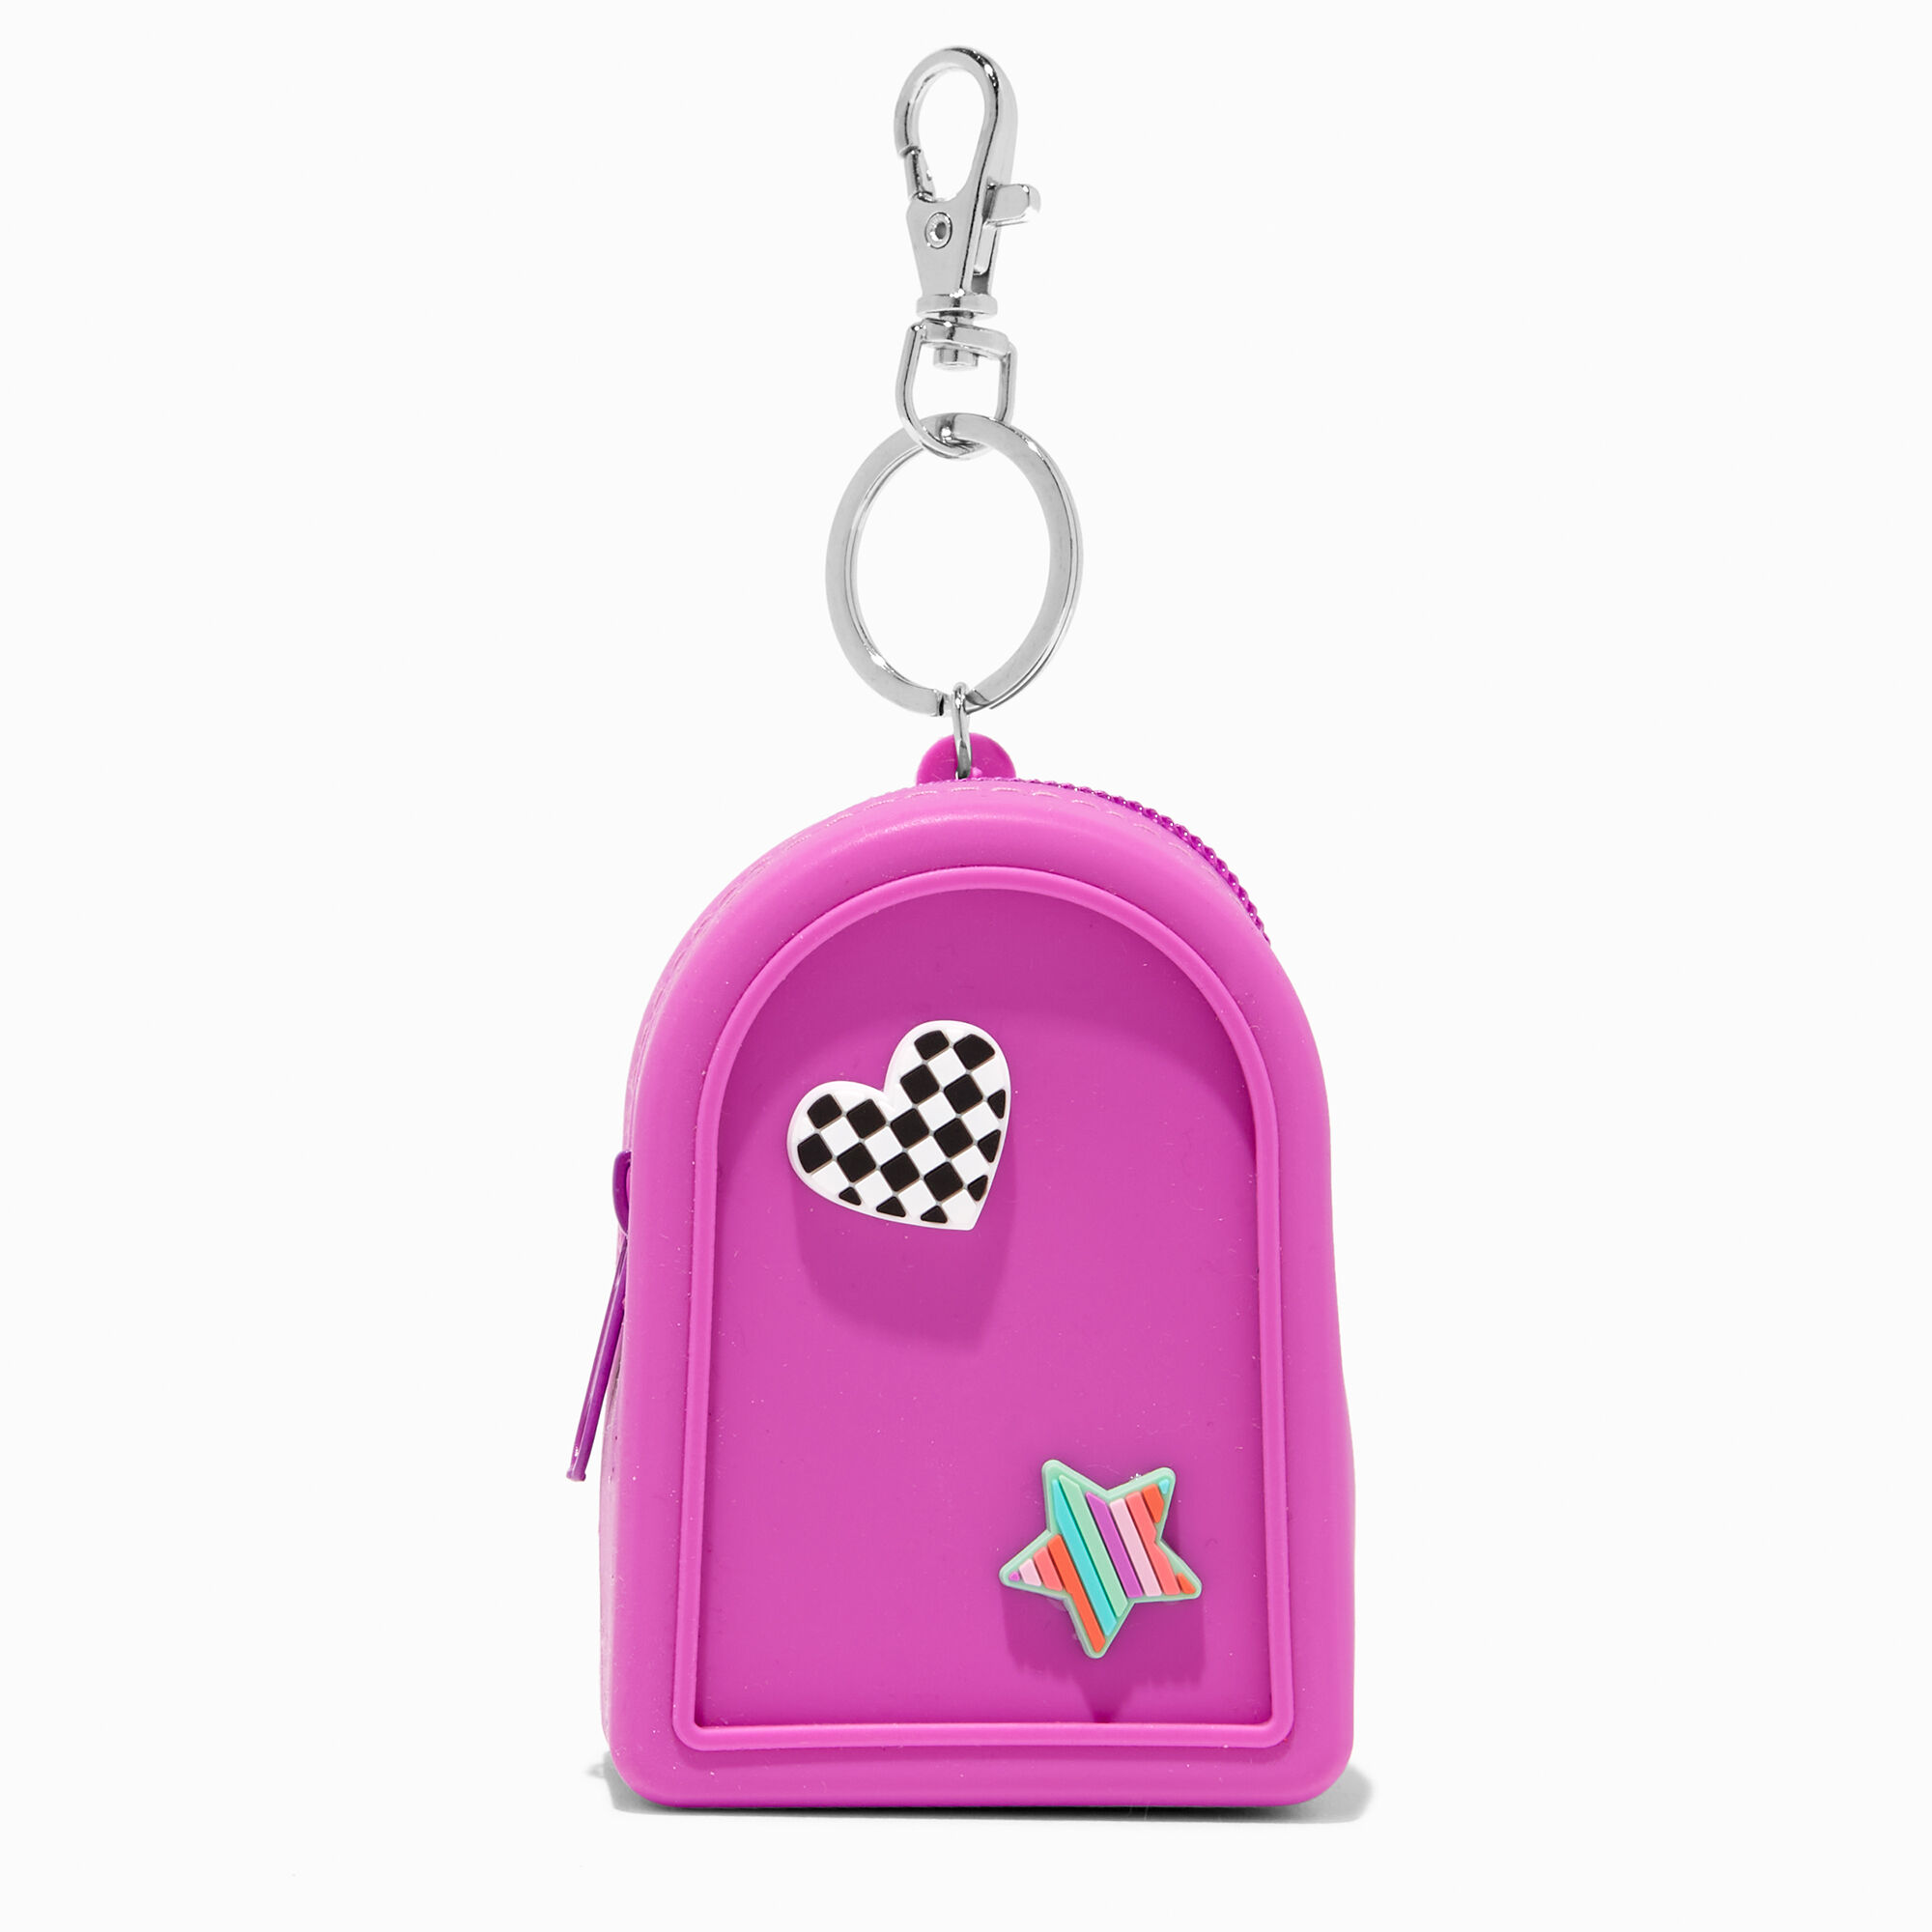 VS mini backpack keychain/charm/coin purse brand new rose studded logo |  eBay